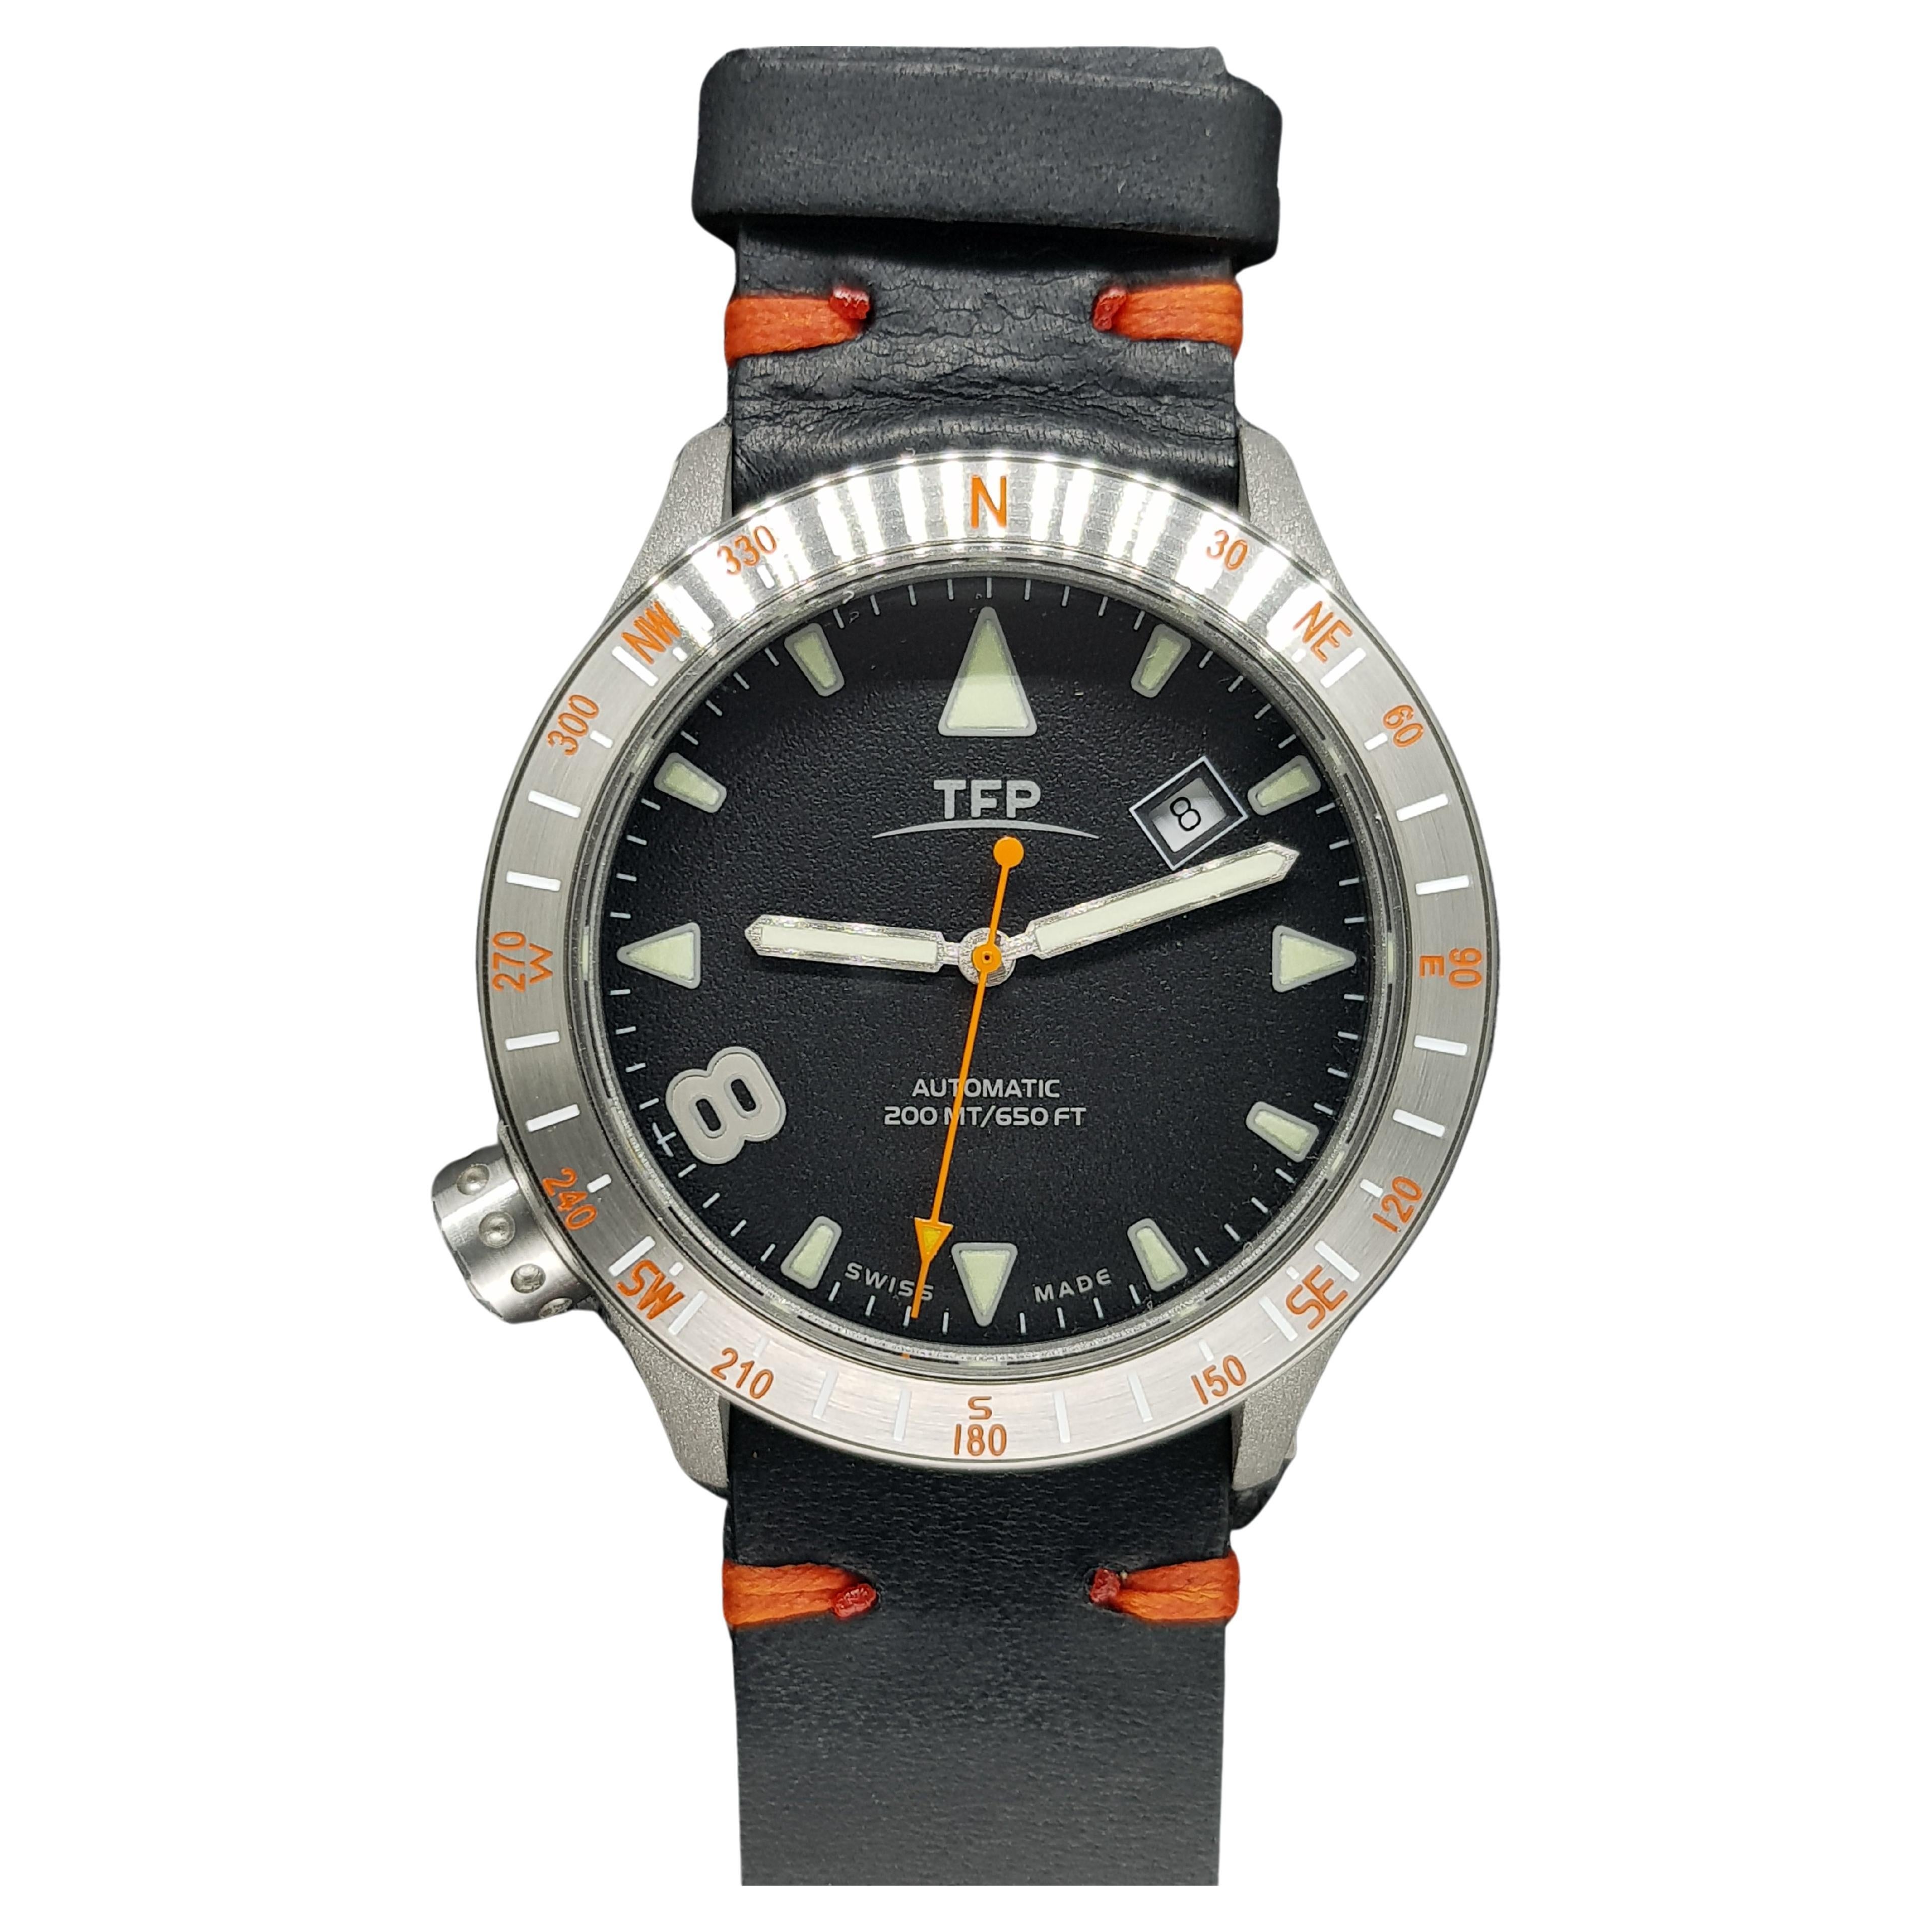 TFP Watch Windrose SBlack Orange #TW100-10-11ora For Sale